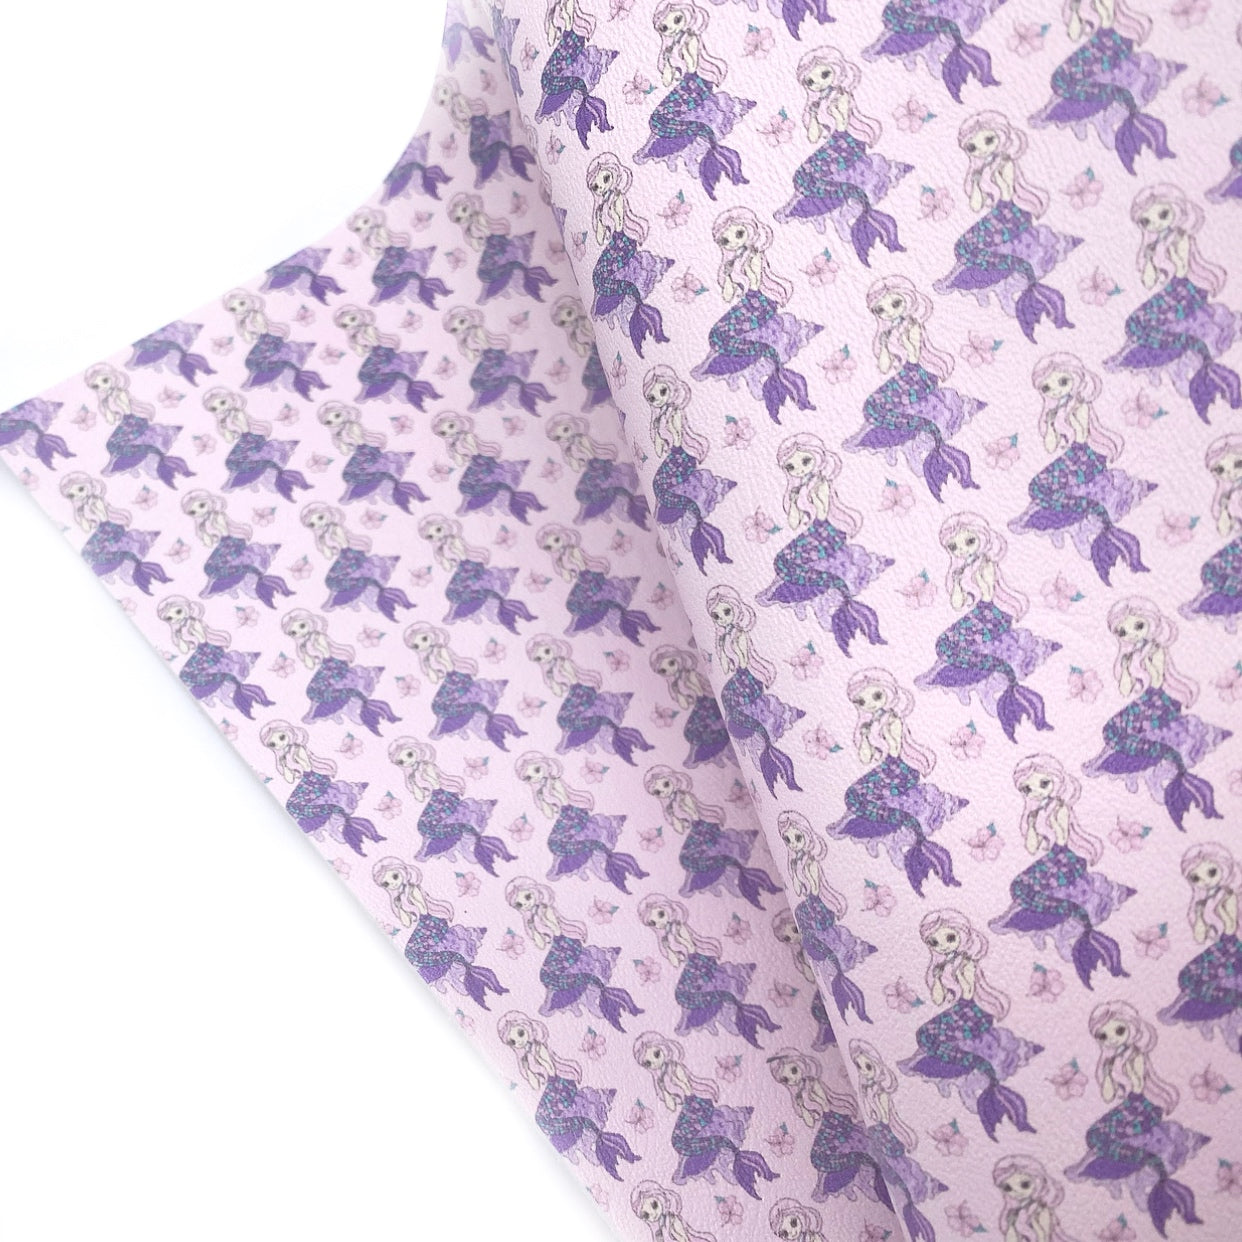 Purple Mermaid Anna Premium Faux Leather Fabric Sheets